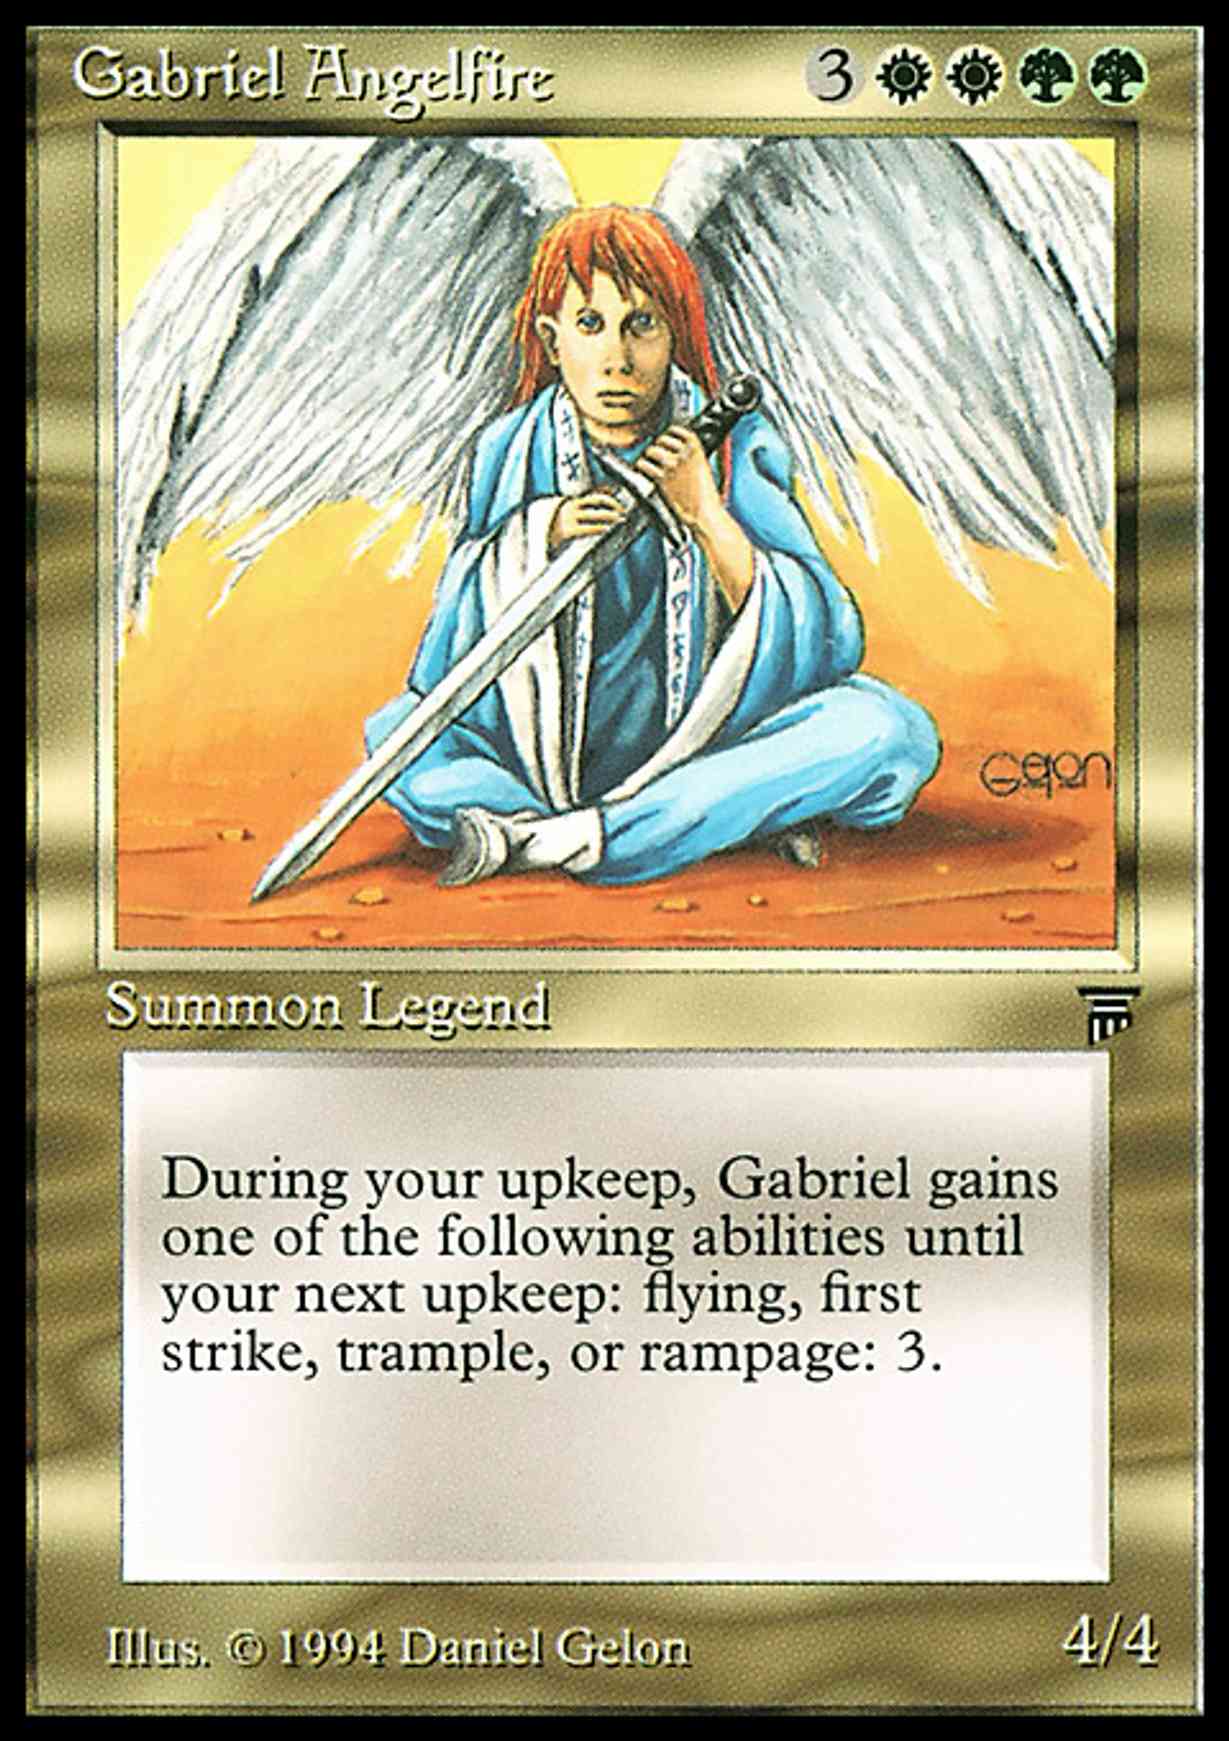 Gabriel Angelfire magic card front